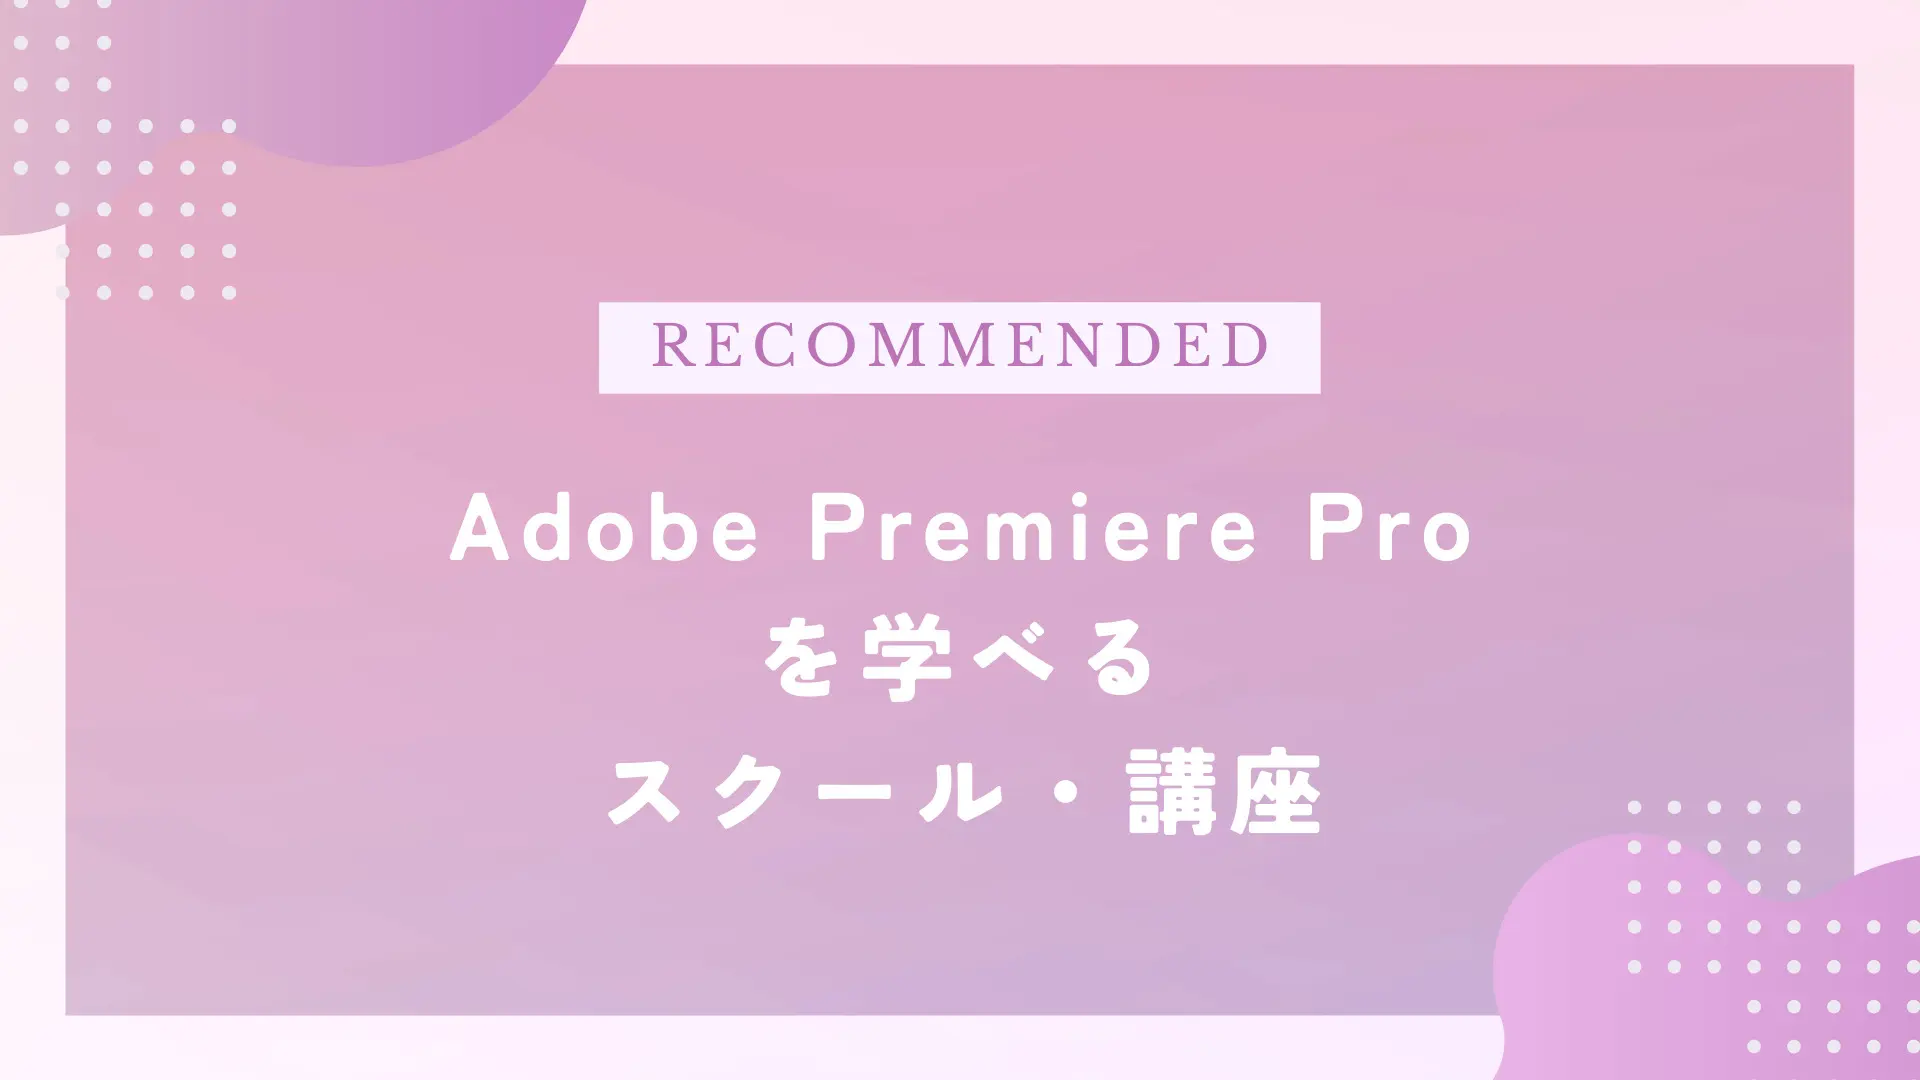 Adobe premiere Proおすすめスクール・講座